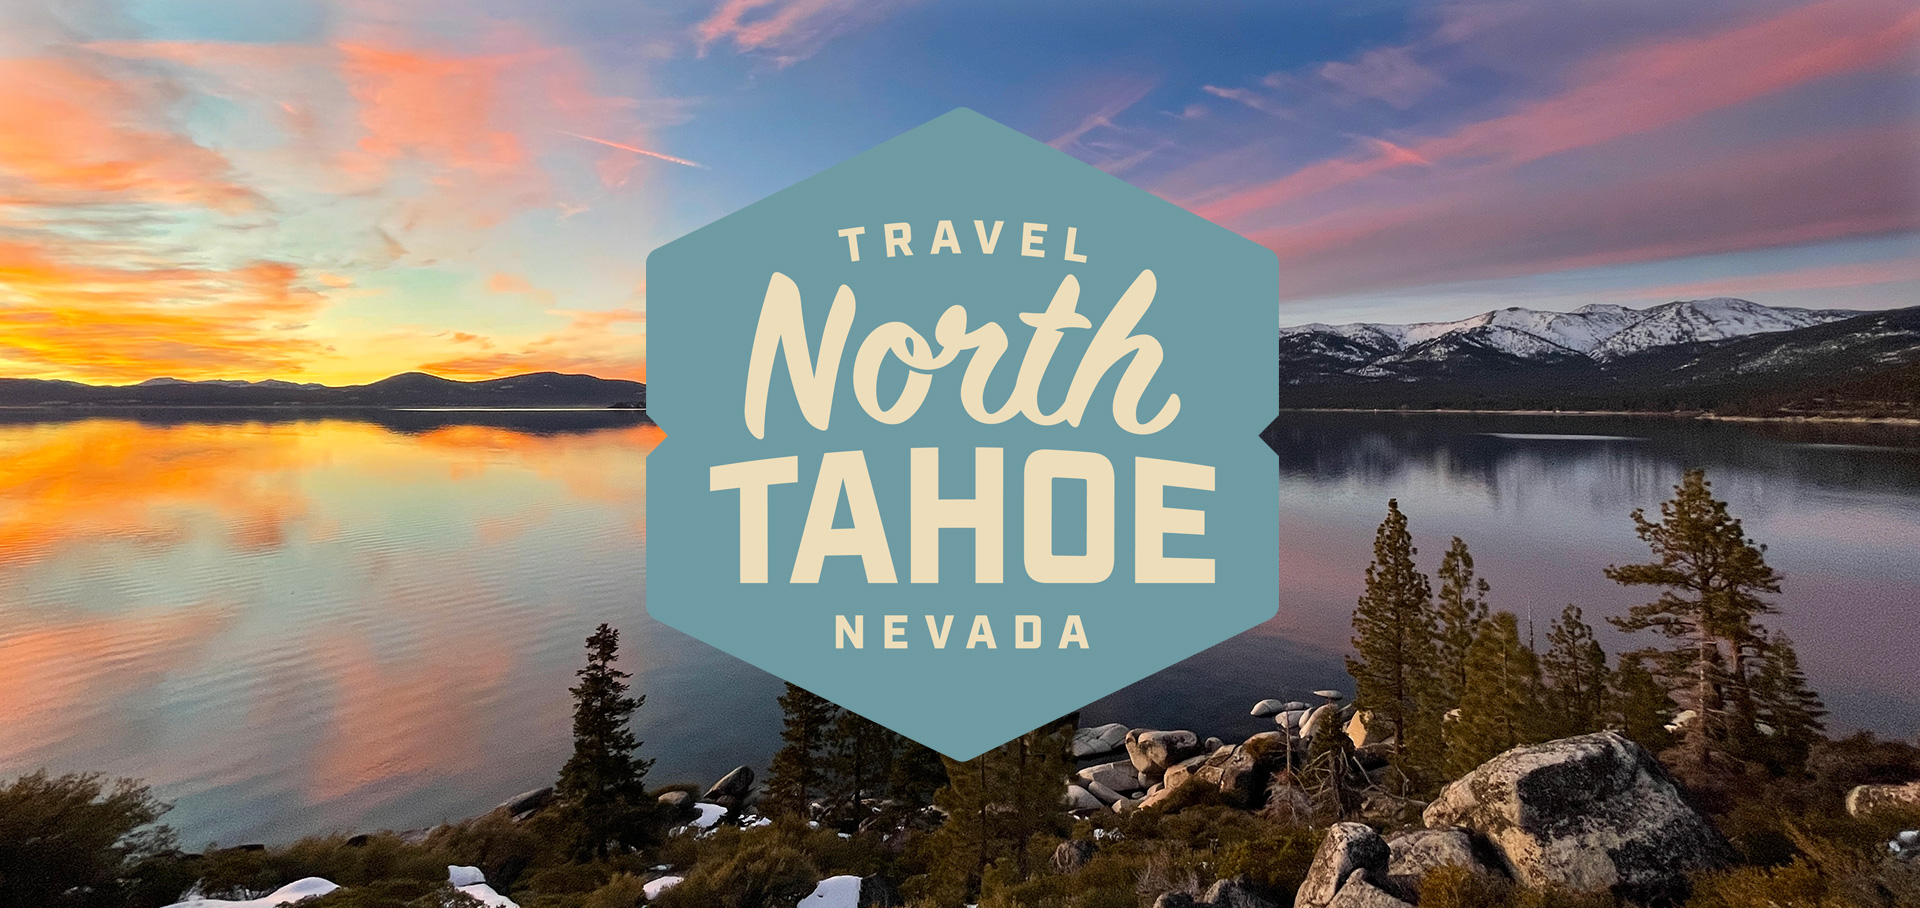 Travel North Lake Tahoe Nevada